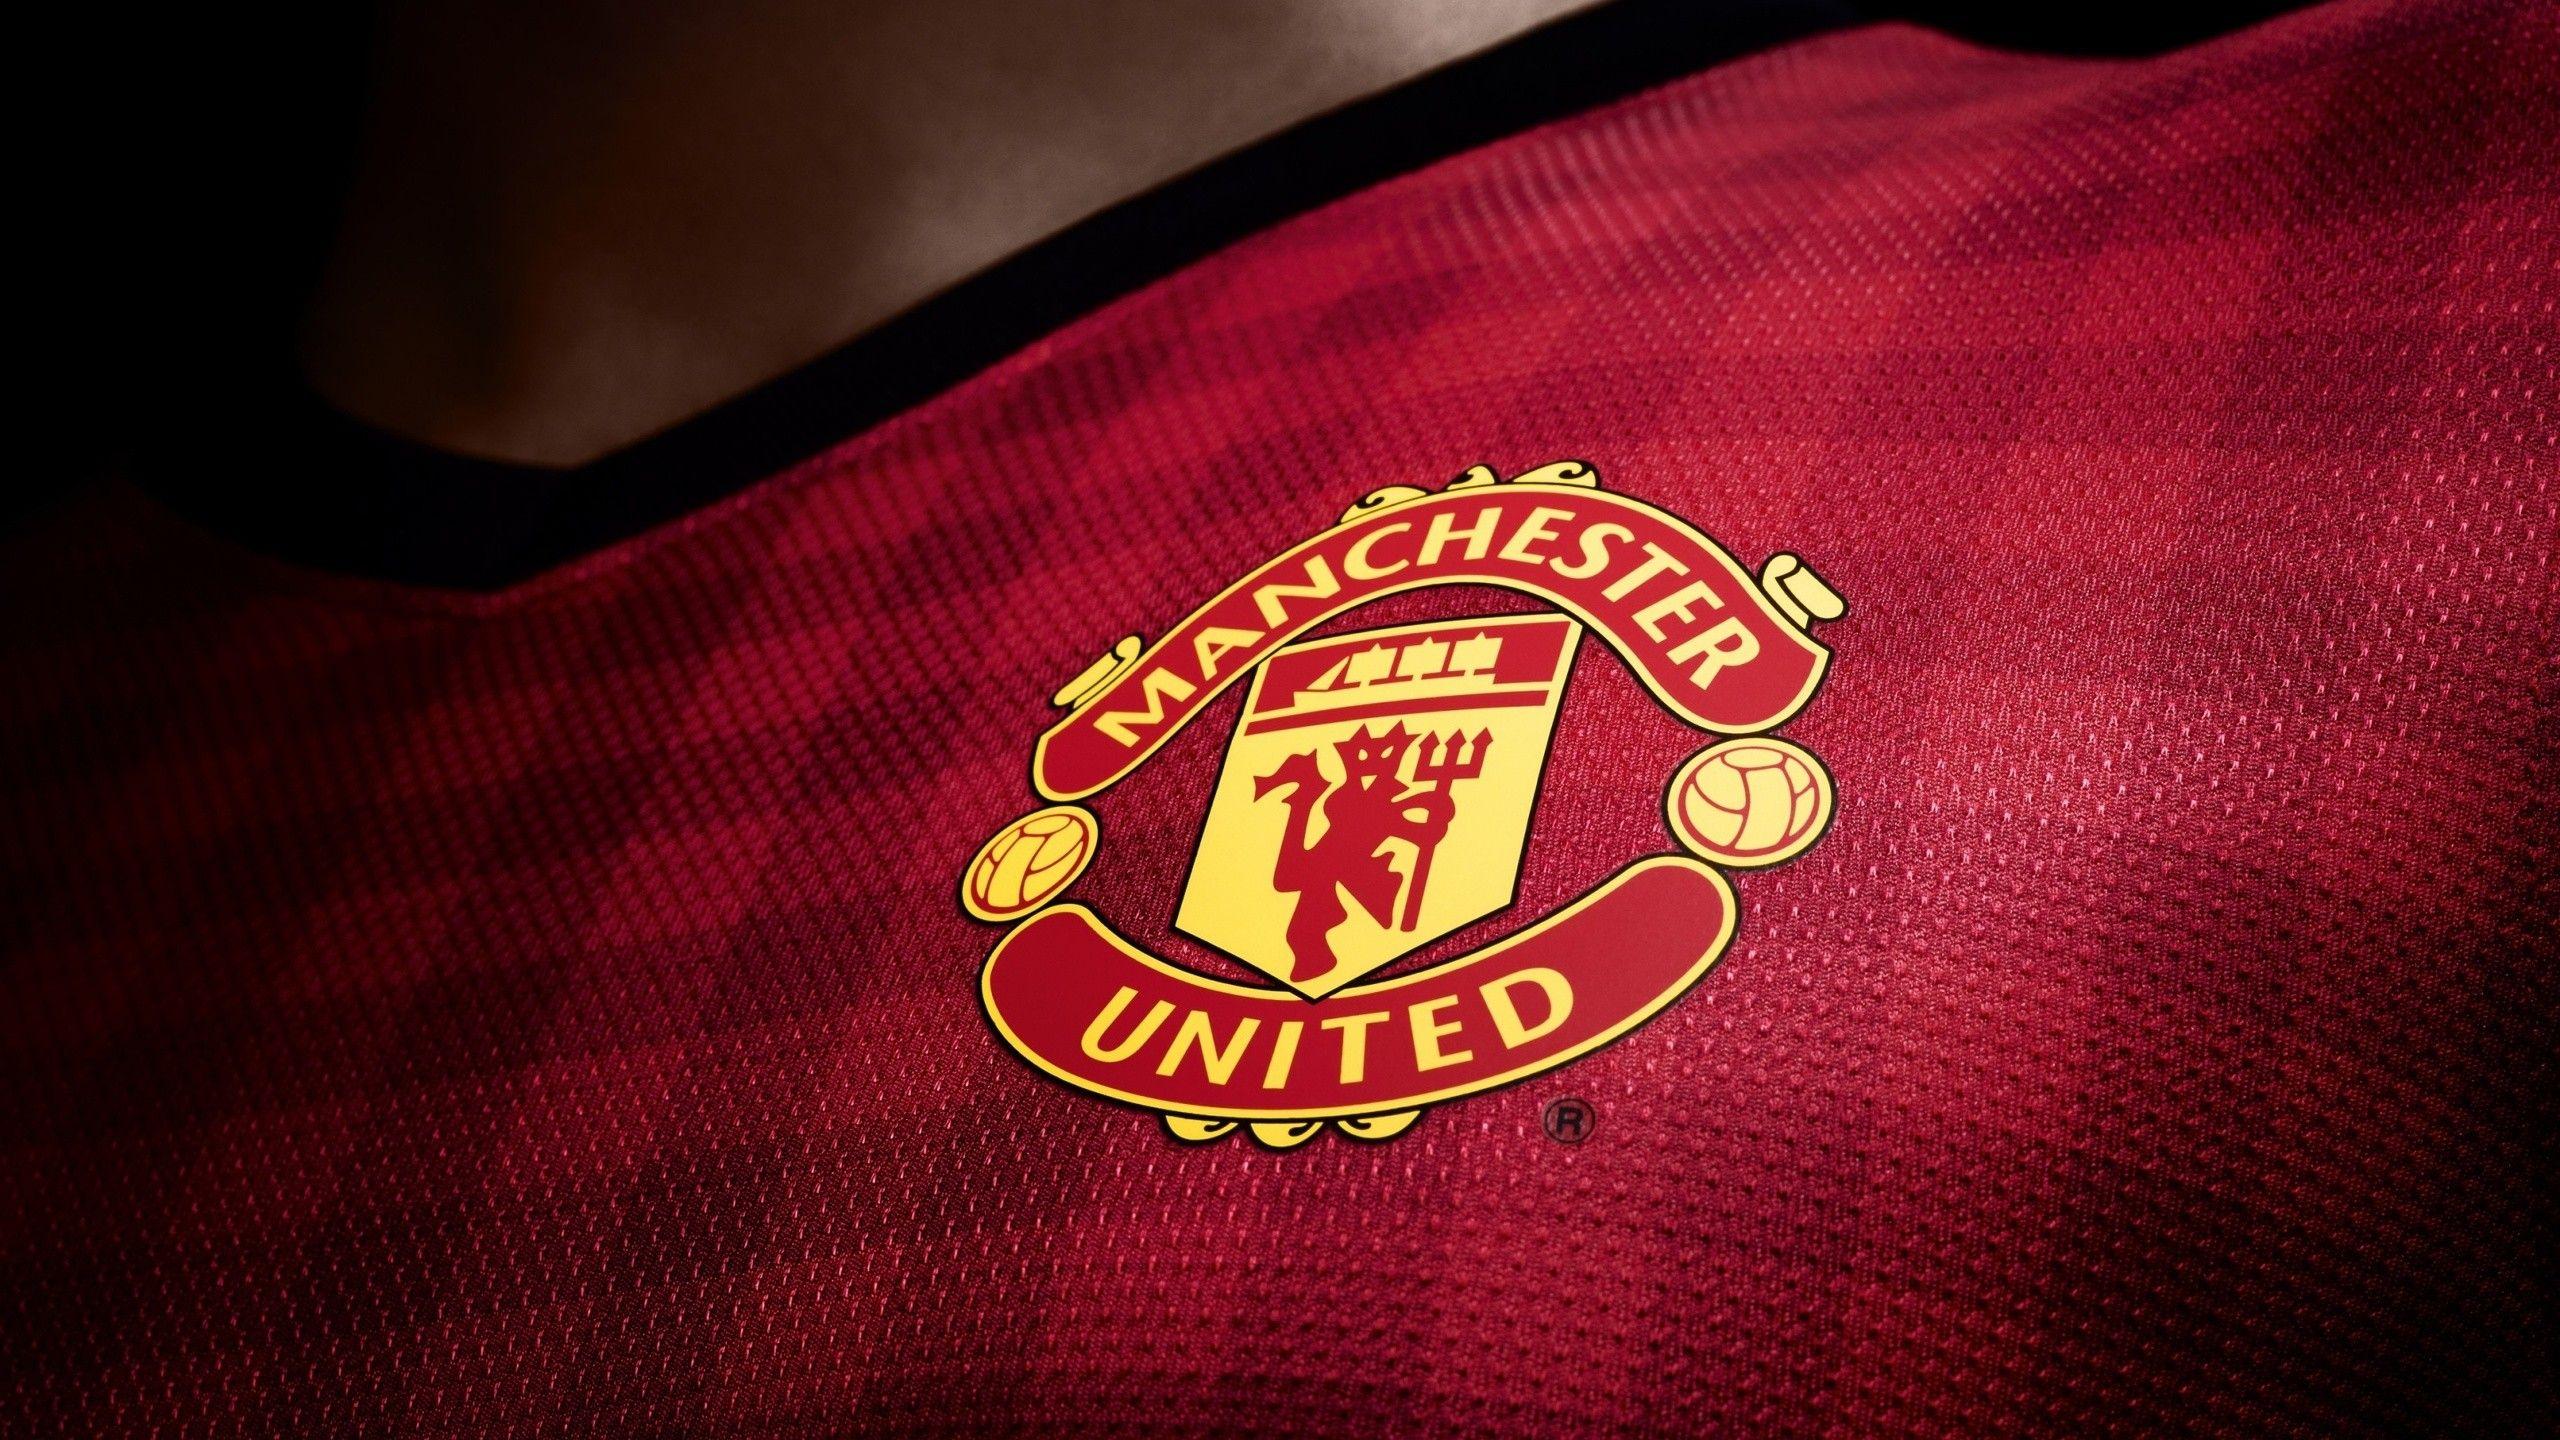 Red Devil Manchester United Logo - Wallpaper : T shirt, logo, flag, soccer clubs, brand, clothing ...